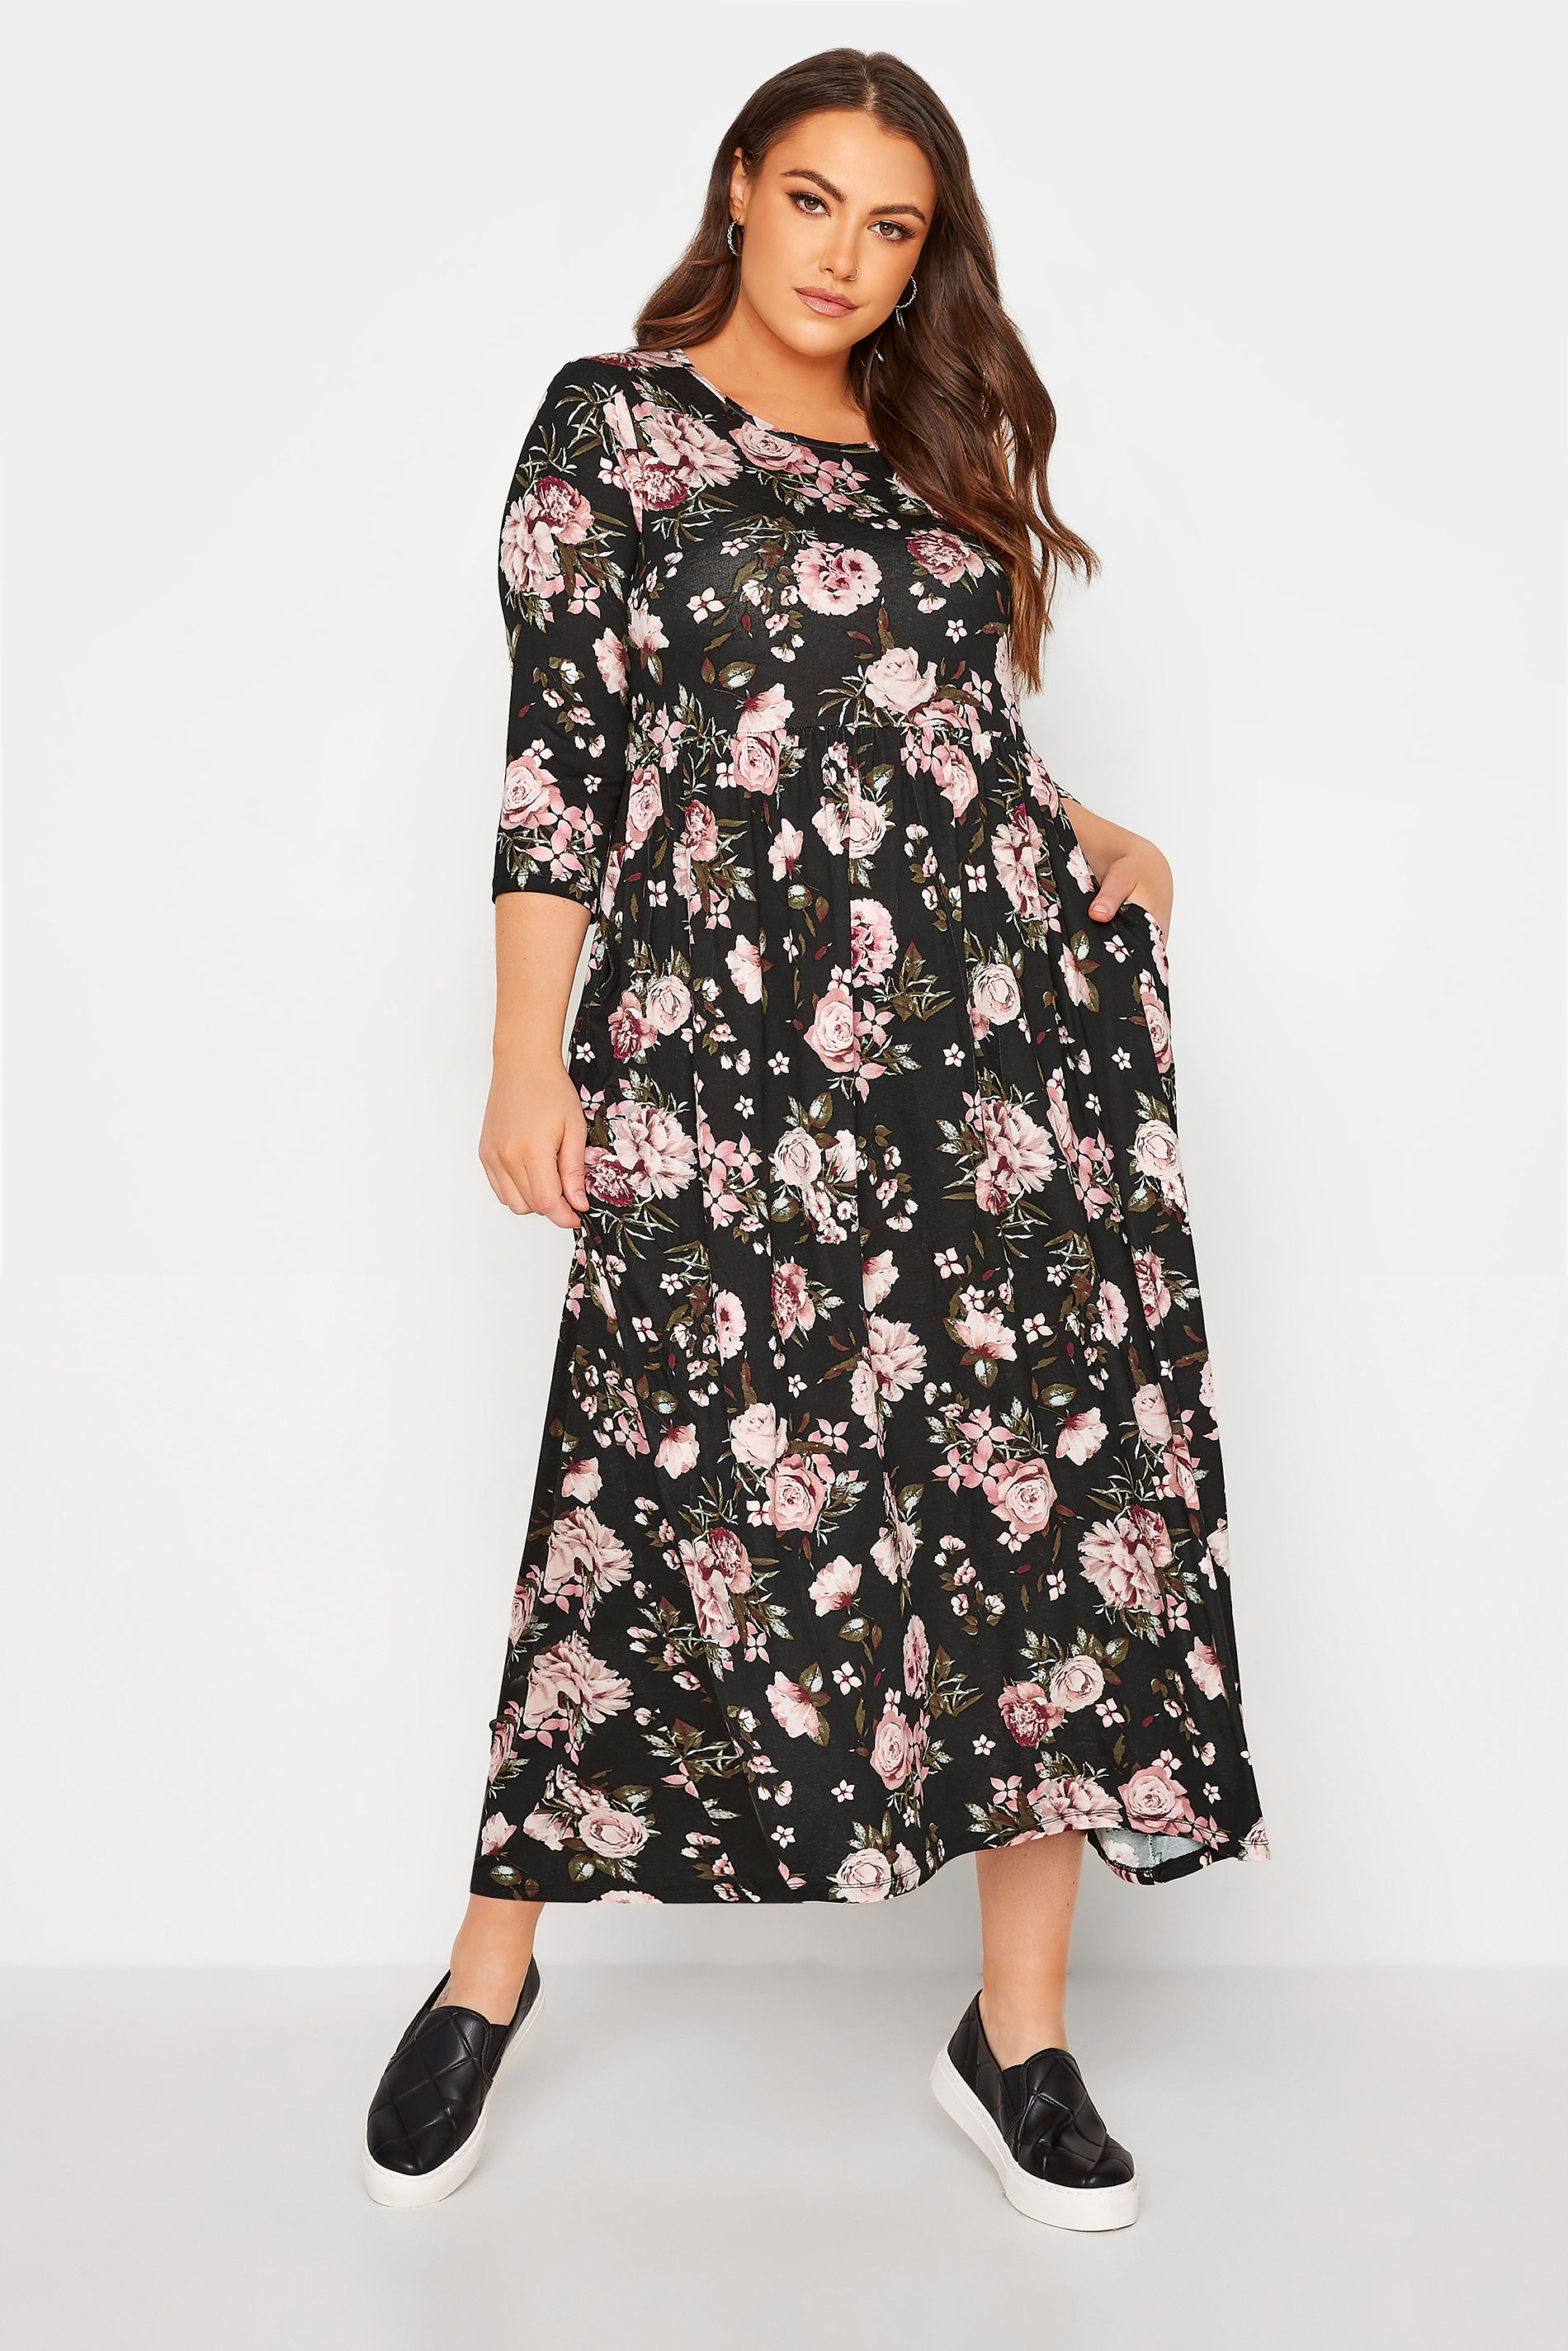 Robes Grande Taille Grande taille  Robes Imprimé Floral | Robe Midi Noire Floral Rose en Jersey - DC87098